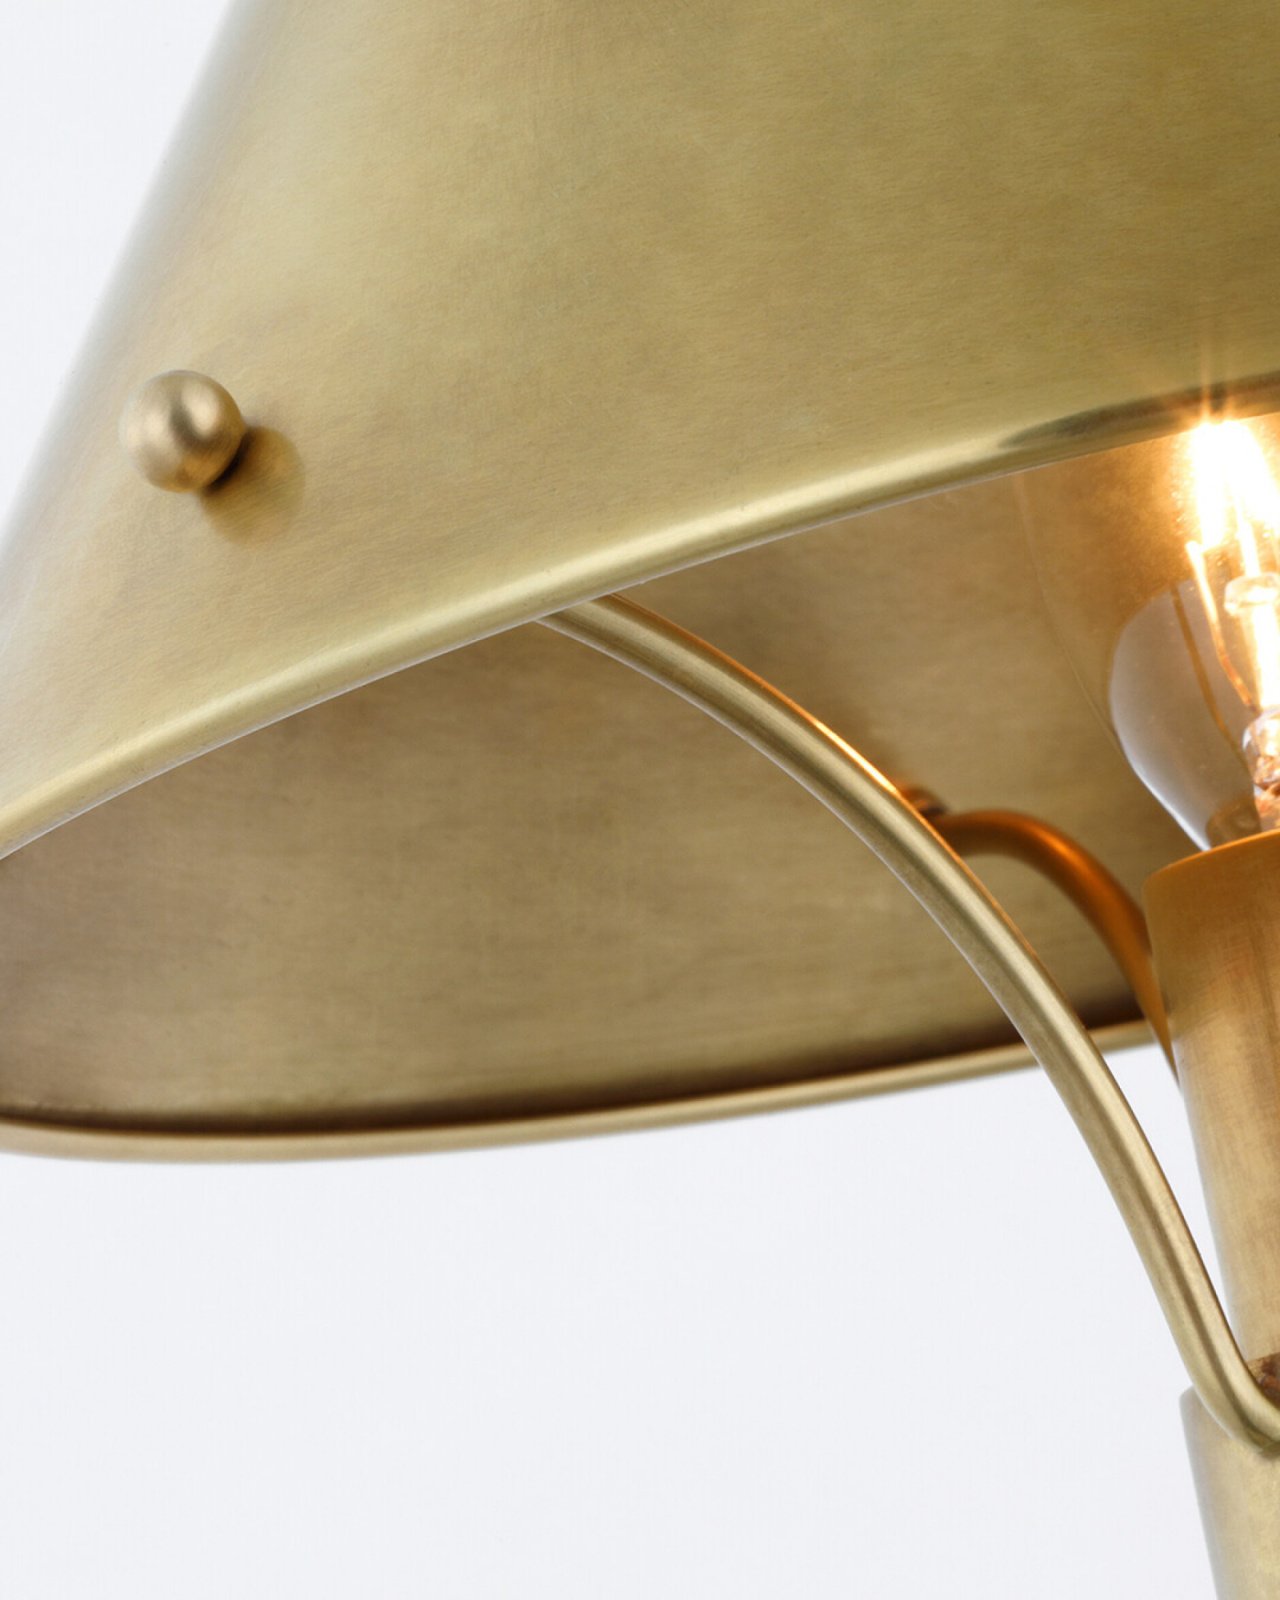 Turlington Table Lamp Antique Brass Medium